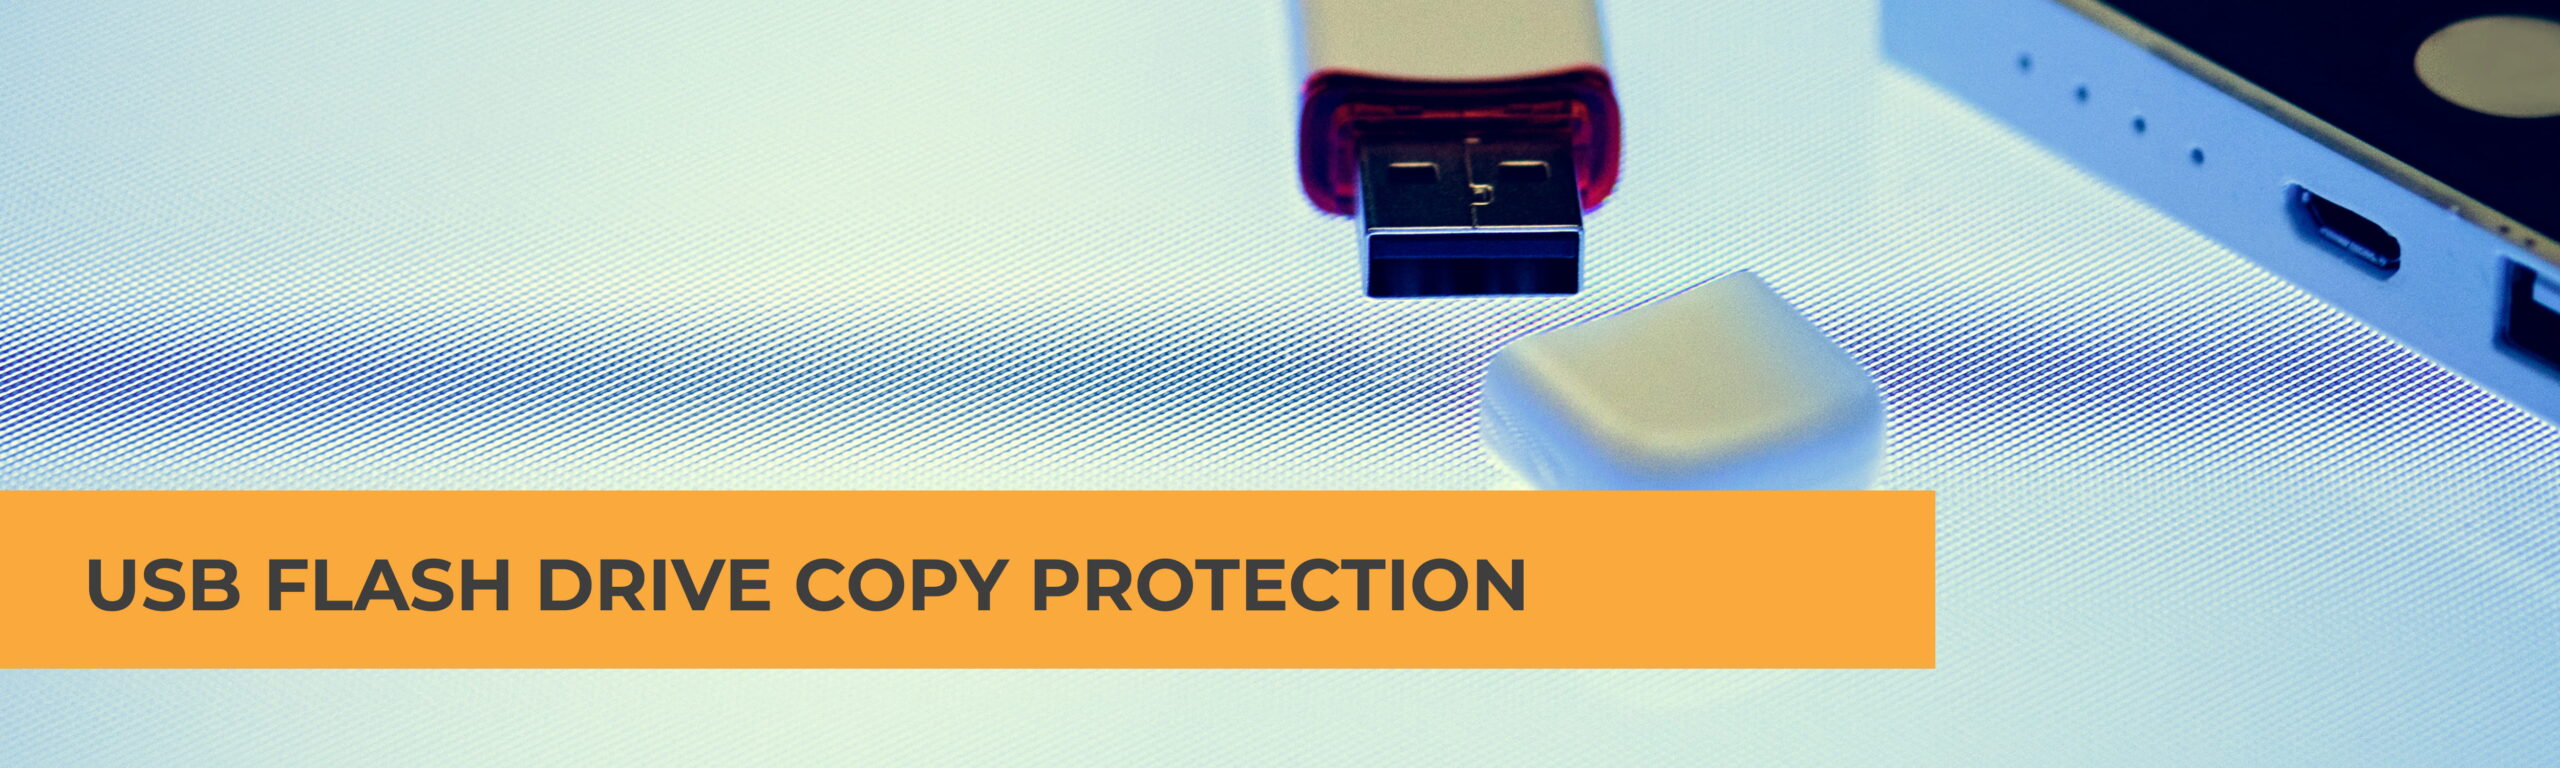 USB Flash Drive Copy Protection